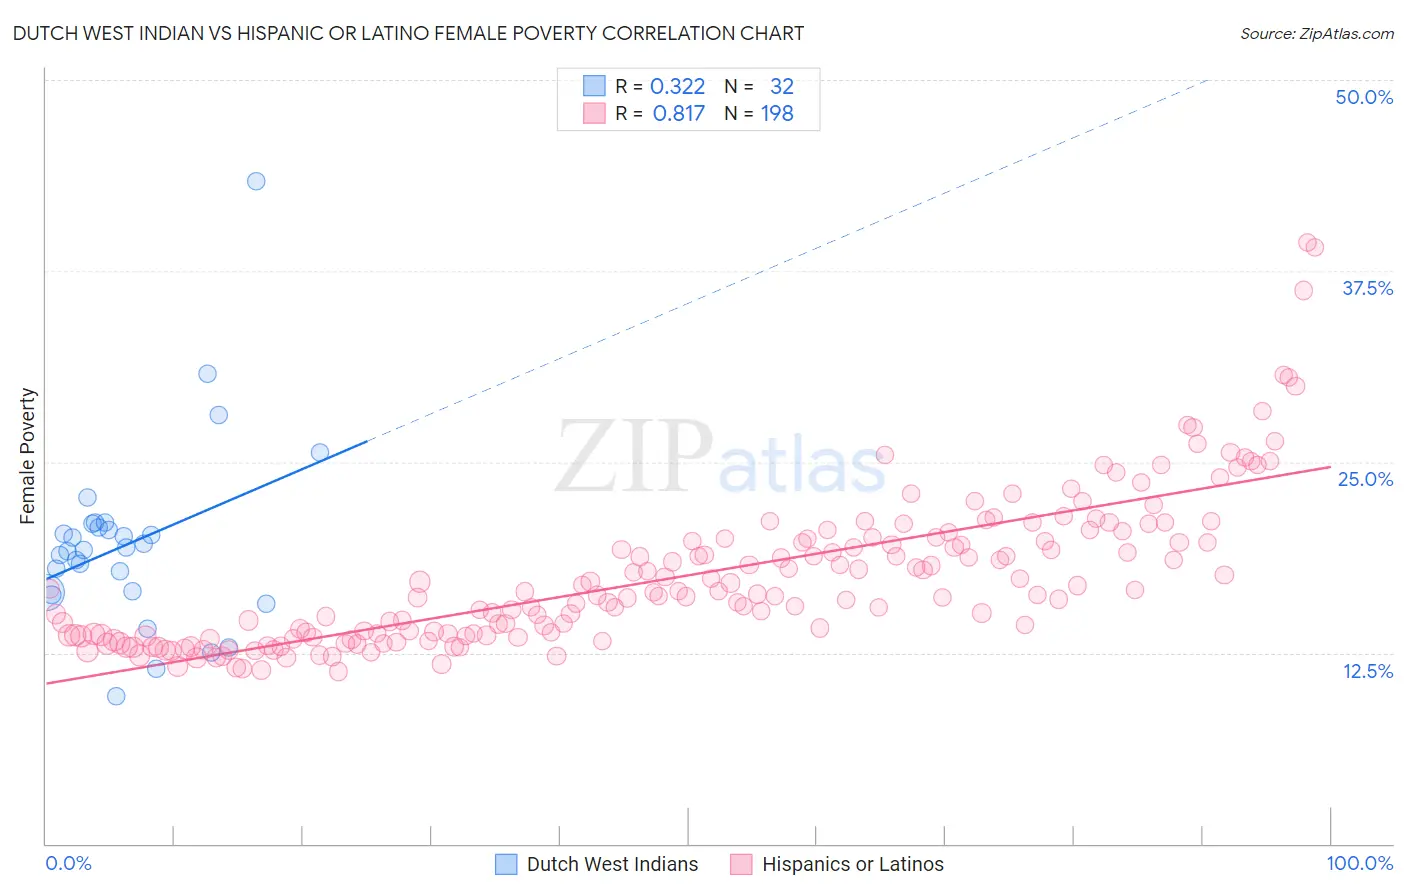 Dutch West Indian vs Hispanic or Latino Female Poverty